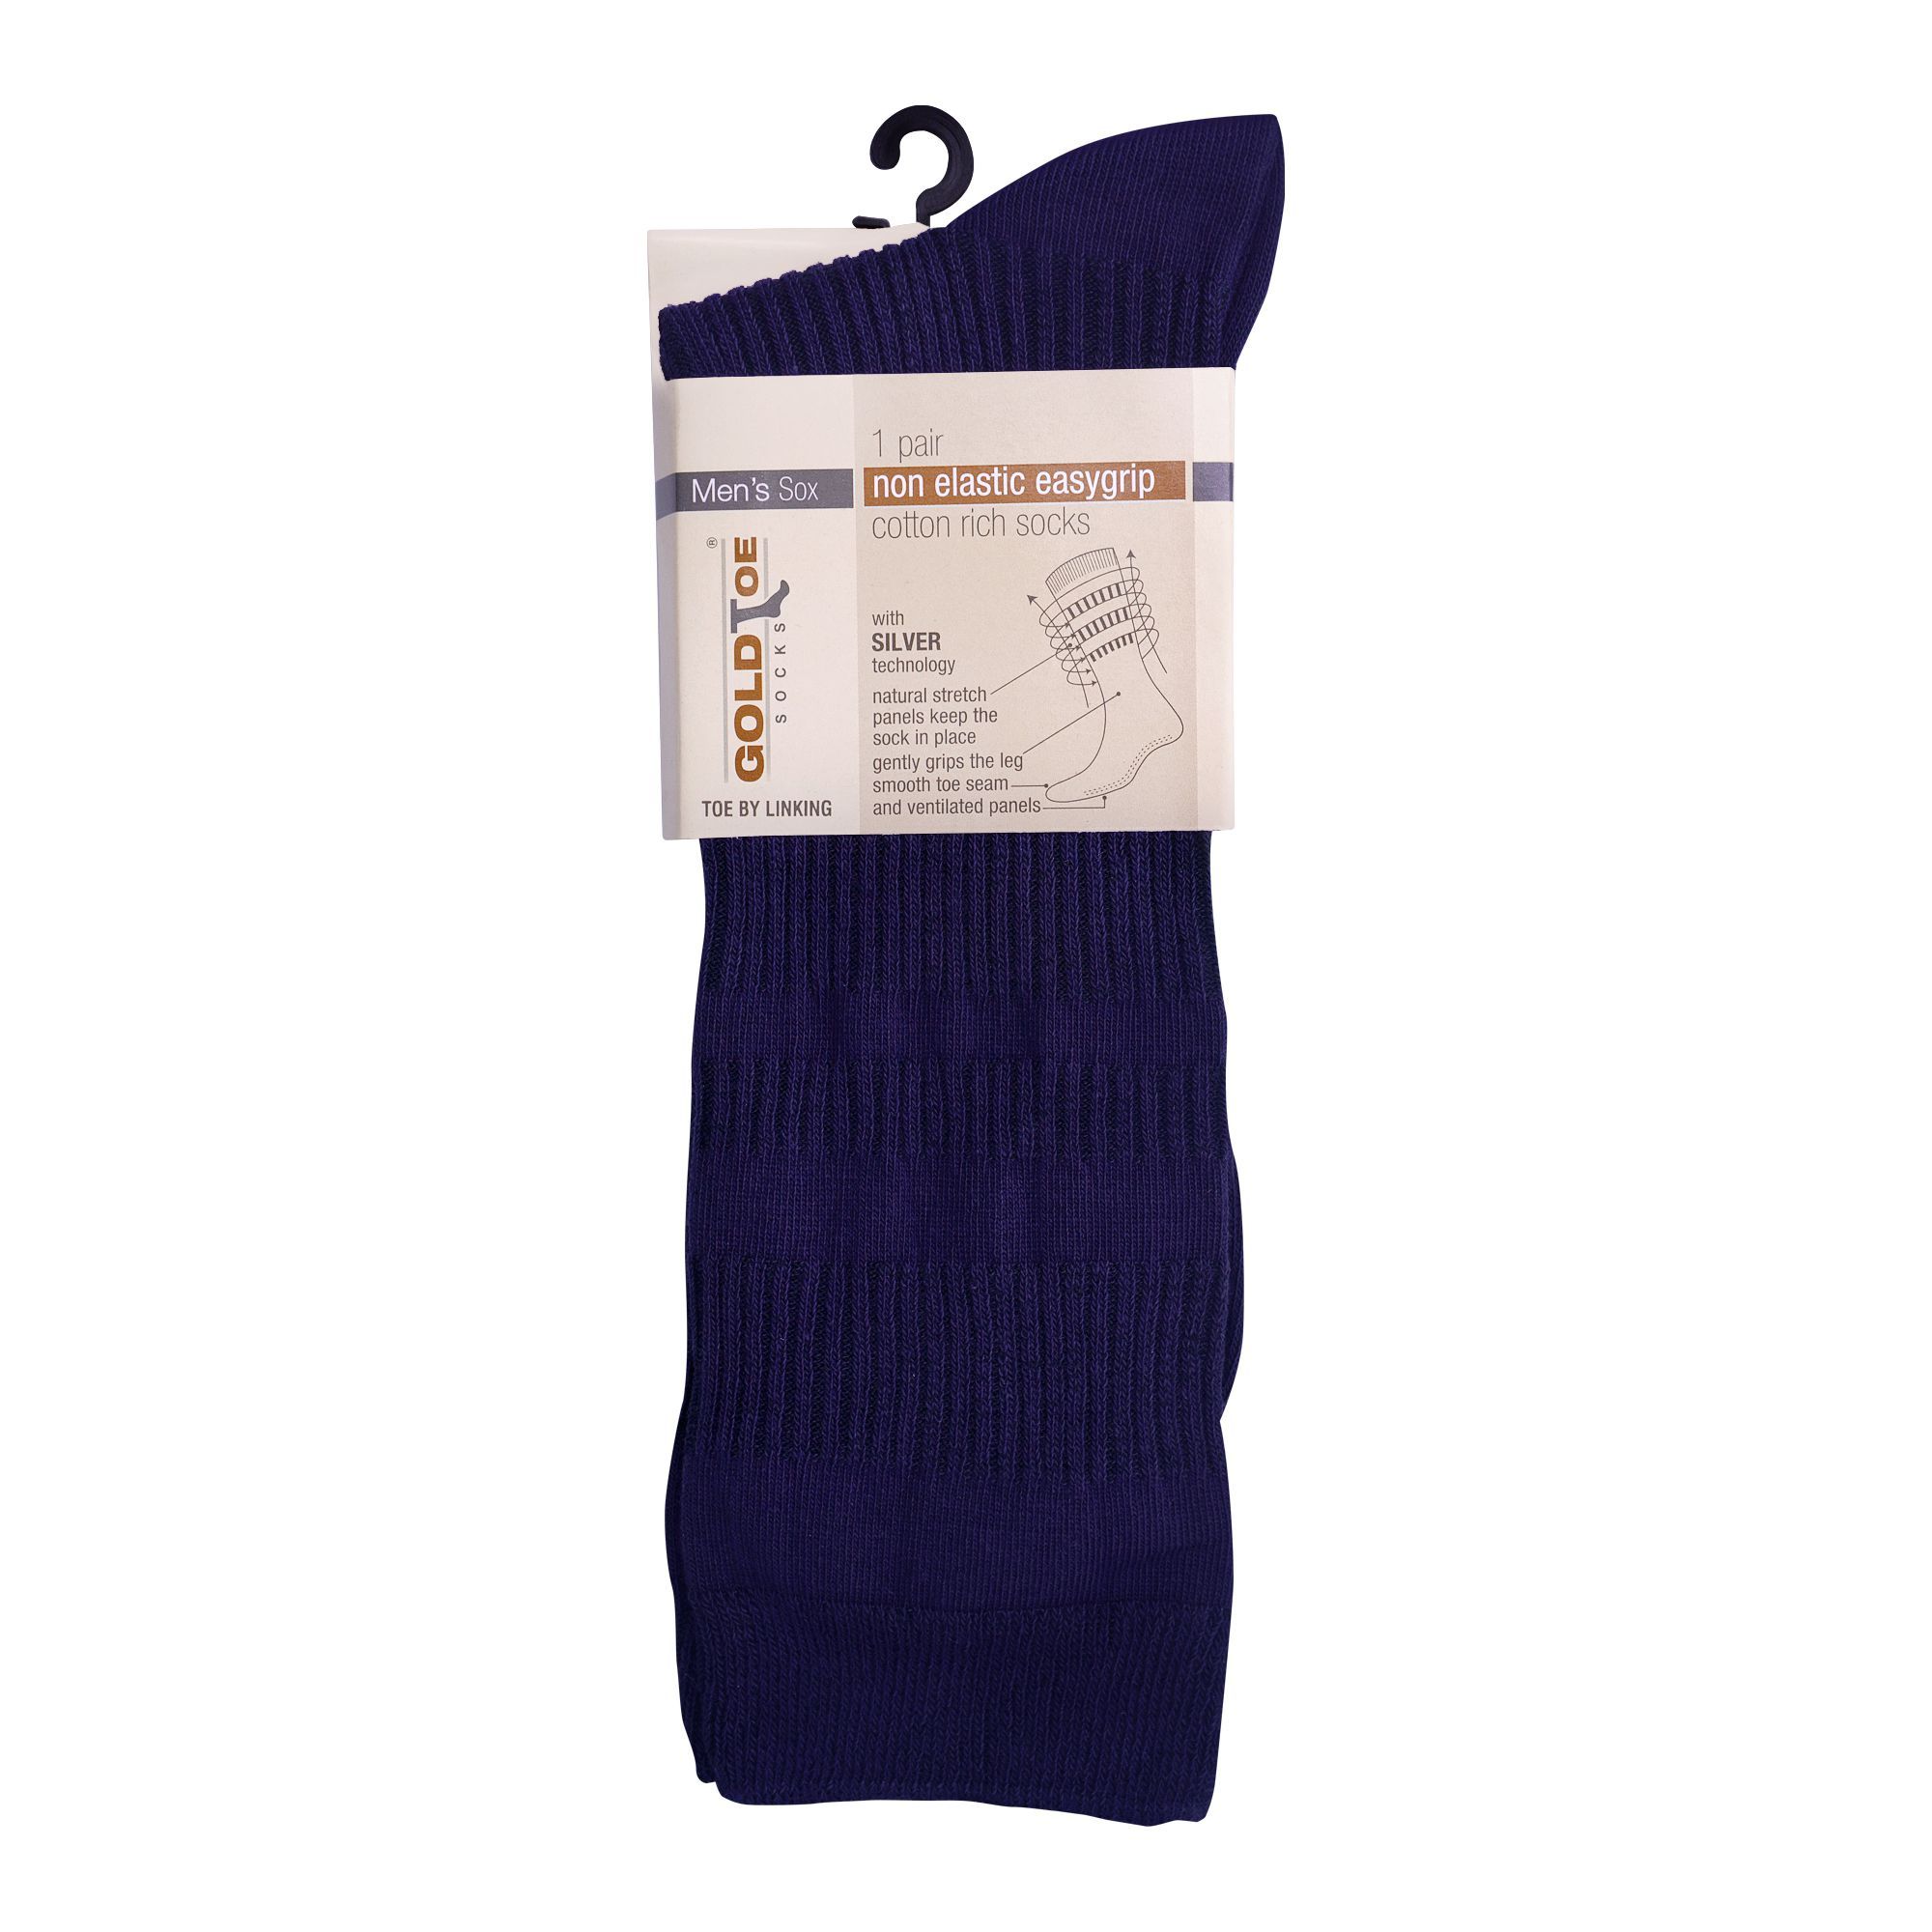 Purchase Goldtoe Non Elastic Easygrip Cotton Rich Socks, 1 Pair, Blue ...